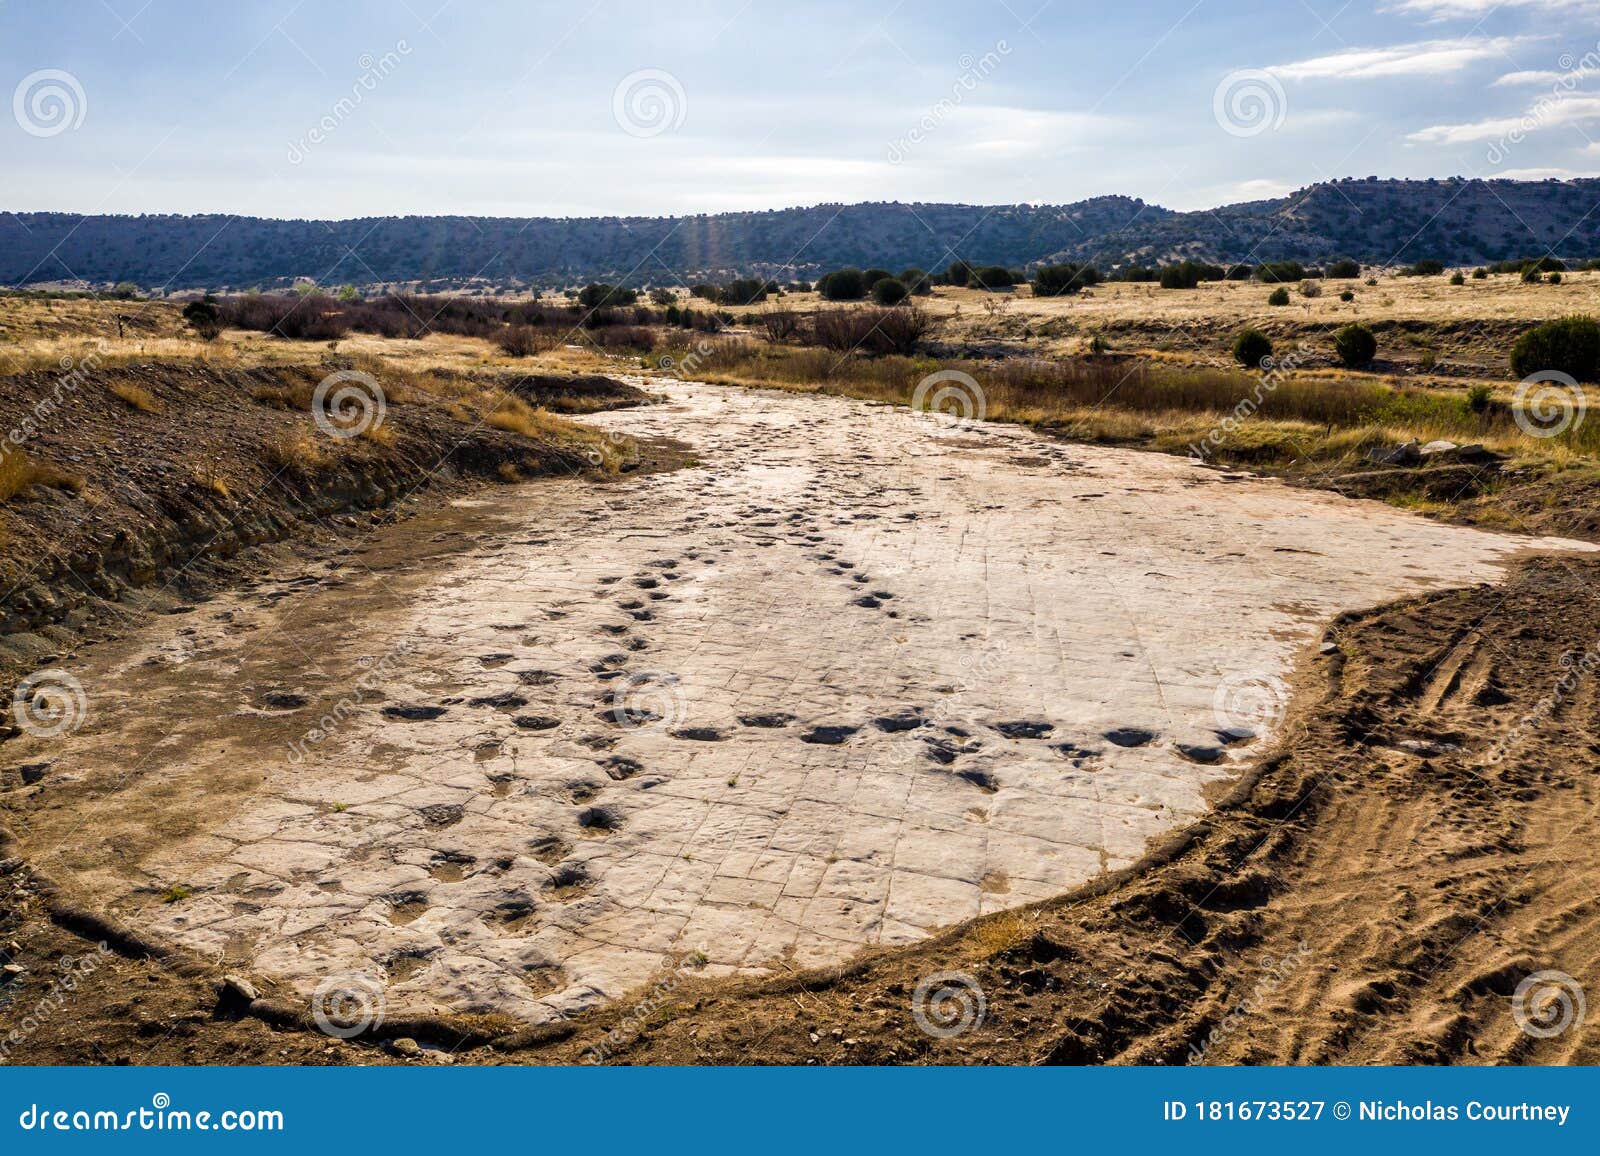 dinosaur tracks of comanche national grassland.  la junta, colorado.  aerial drone photo